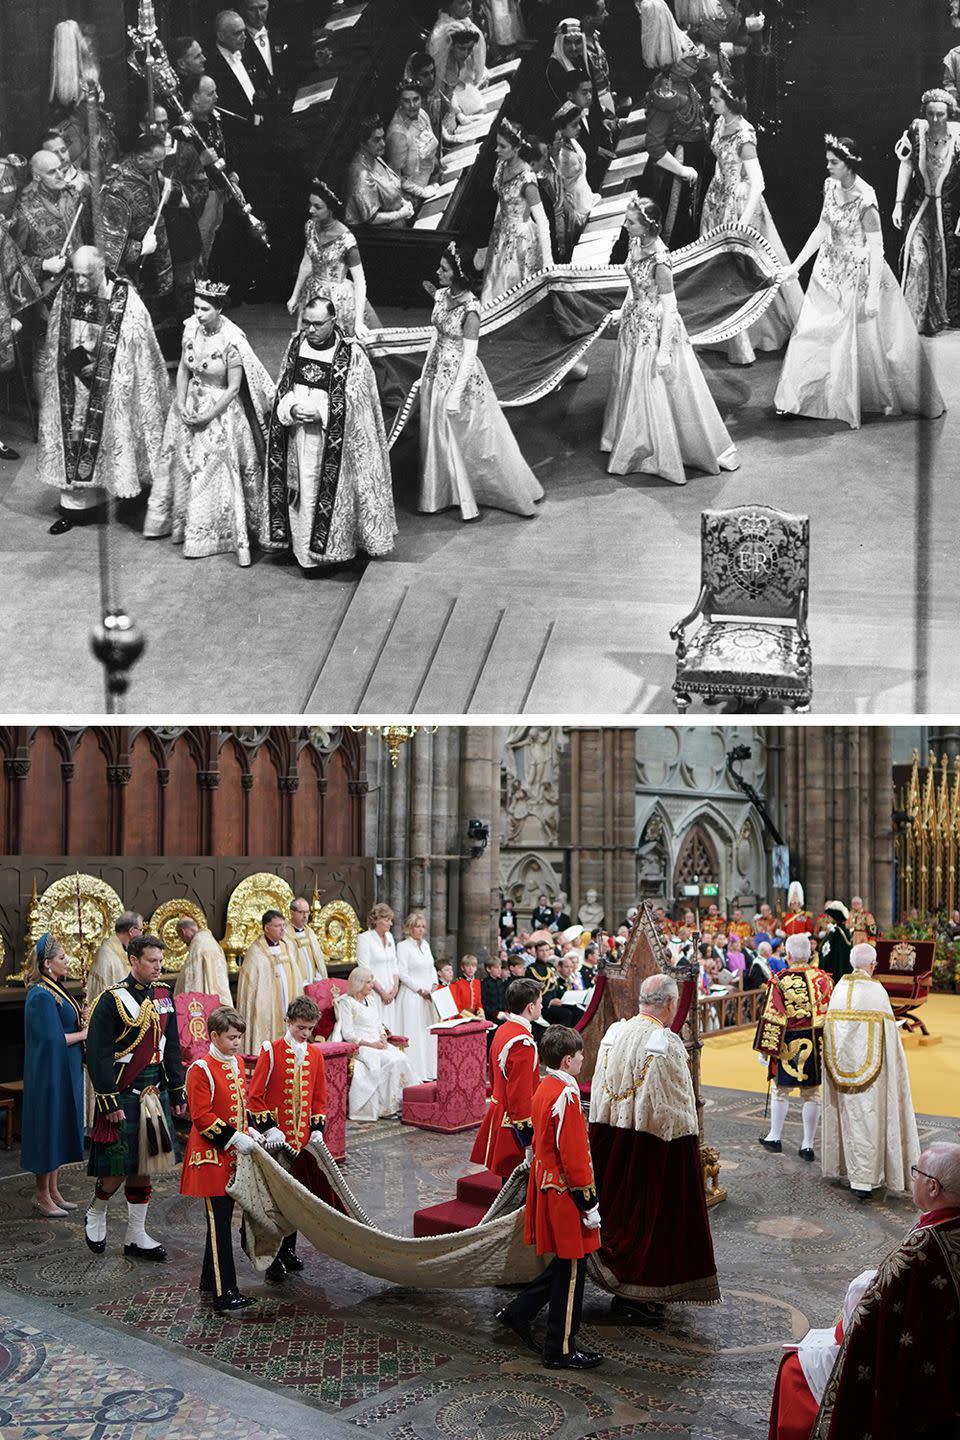 queen elizabeth versus king charles coronation photos